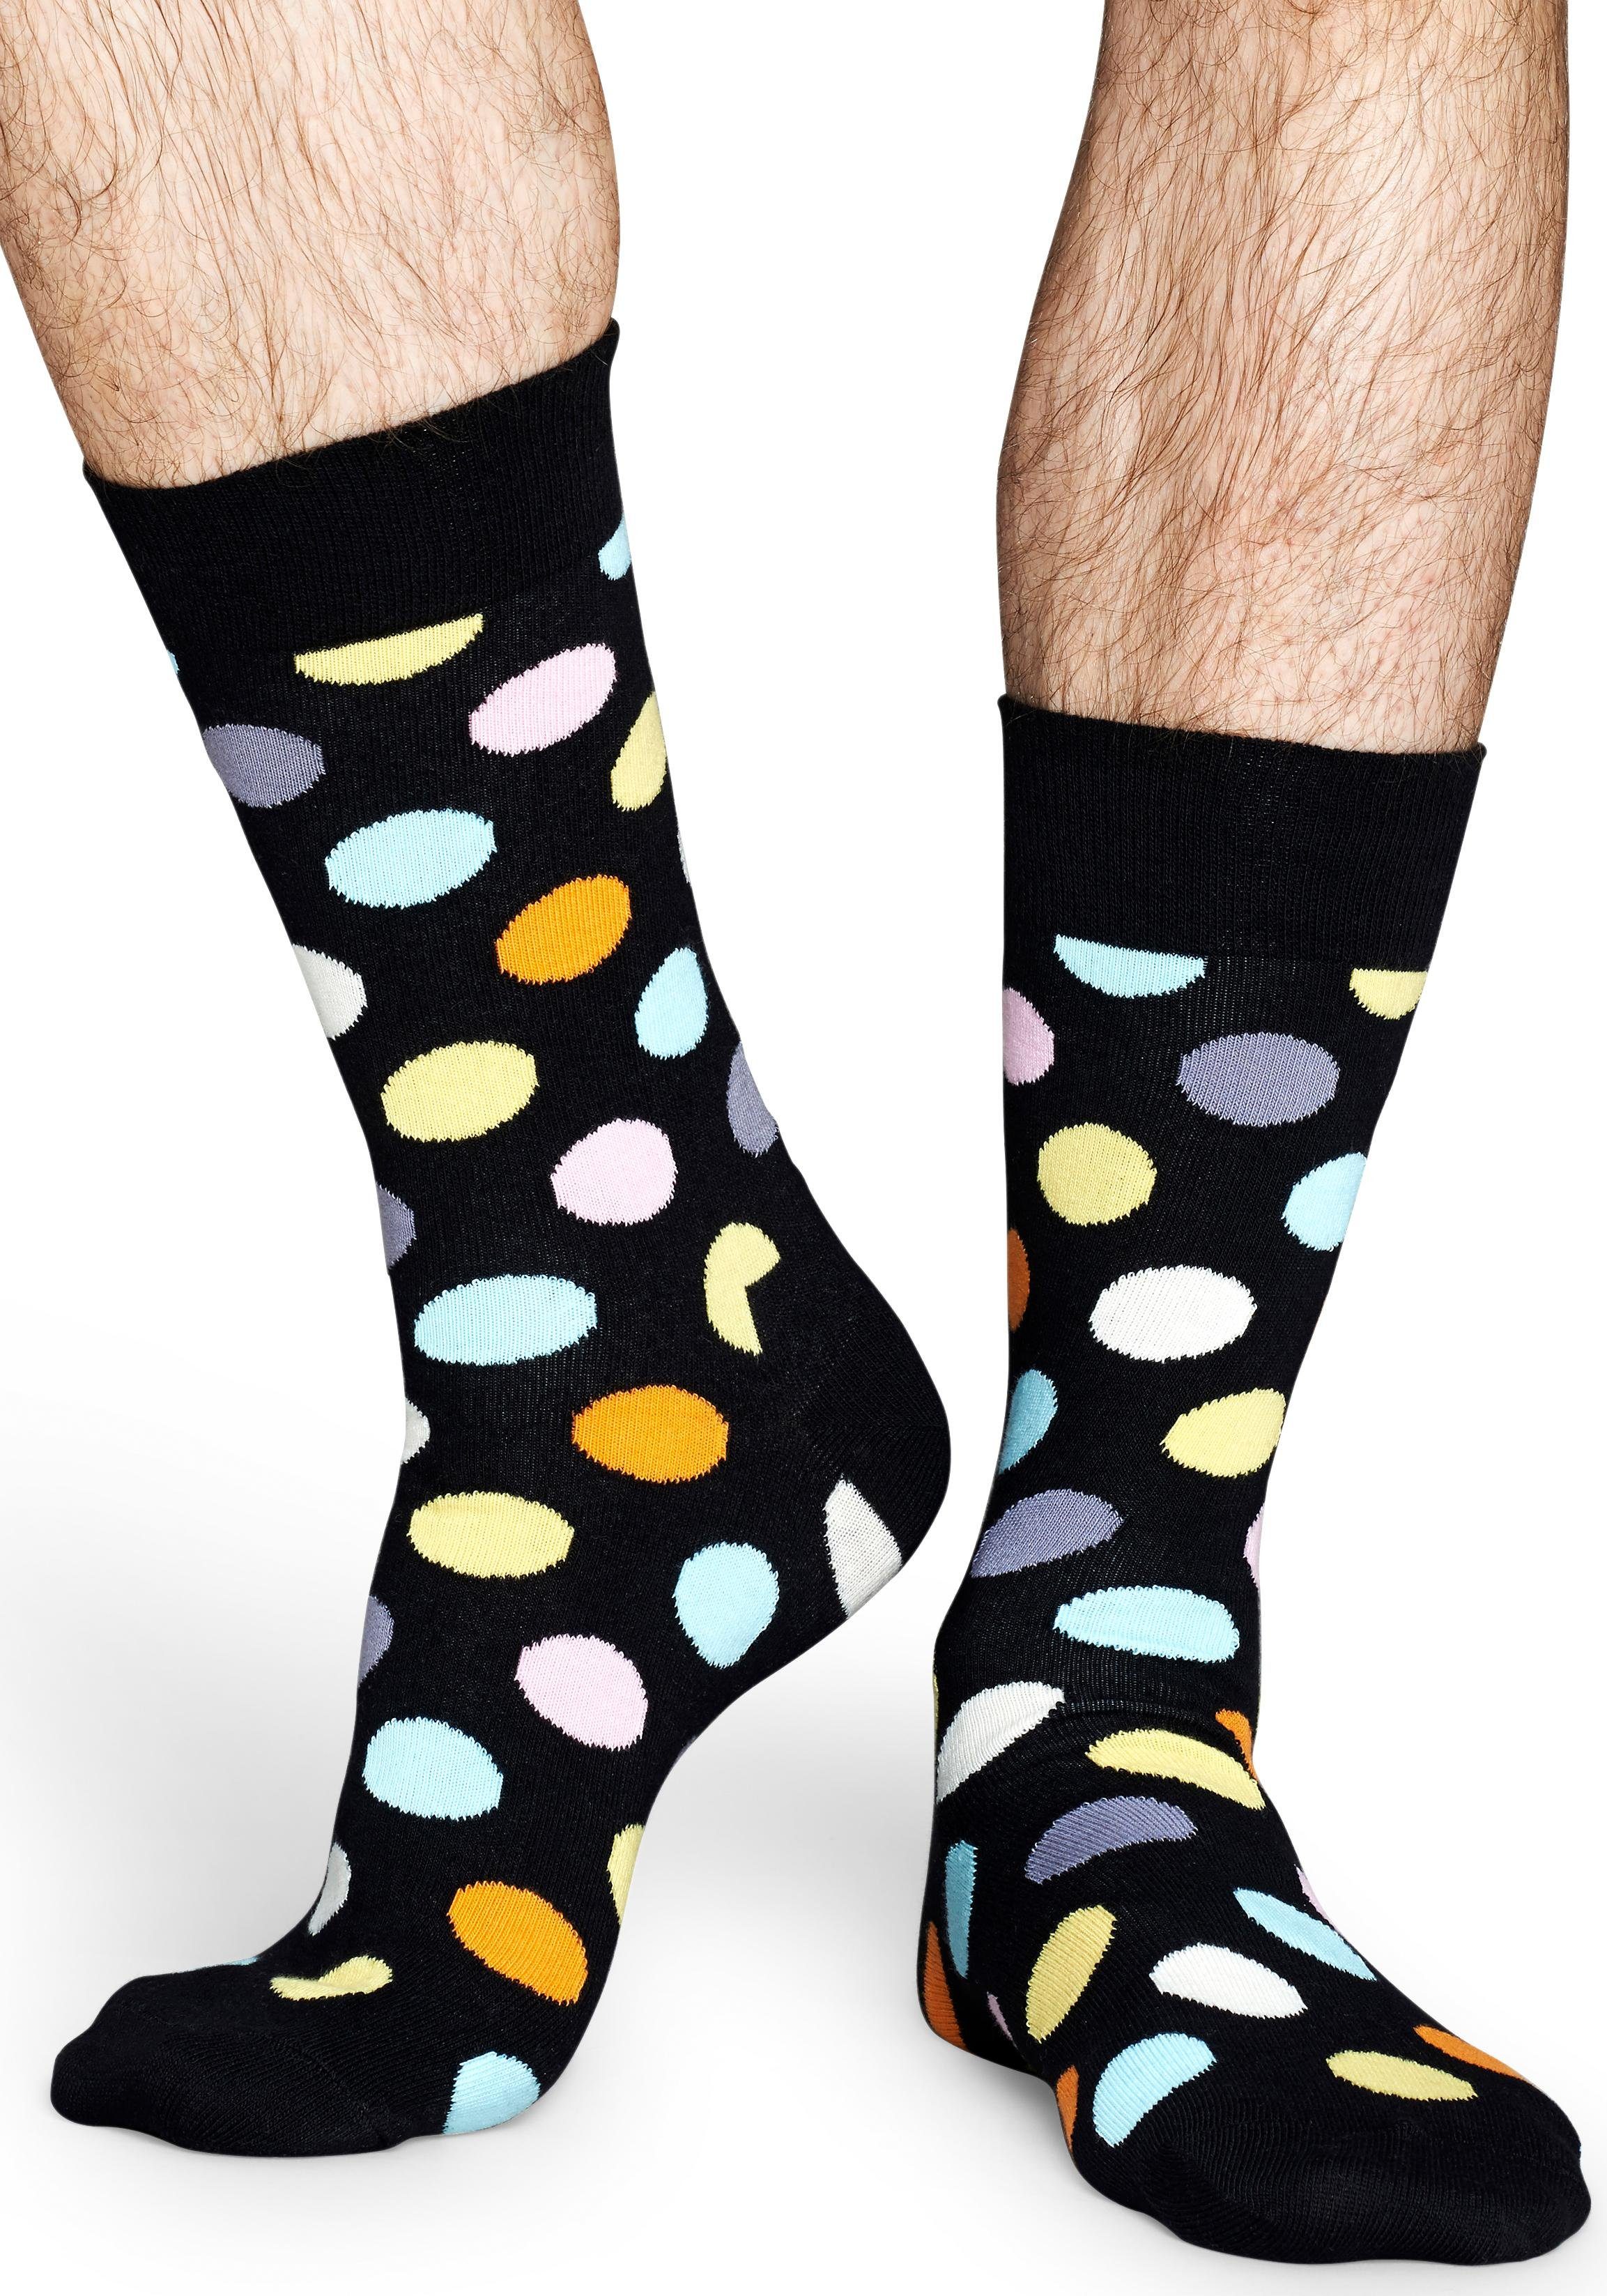 Wäsche/Bademode Socken Happy Socks Socken Big Dot mit buntem Punktemuster